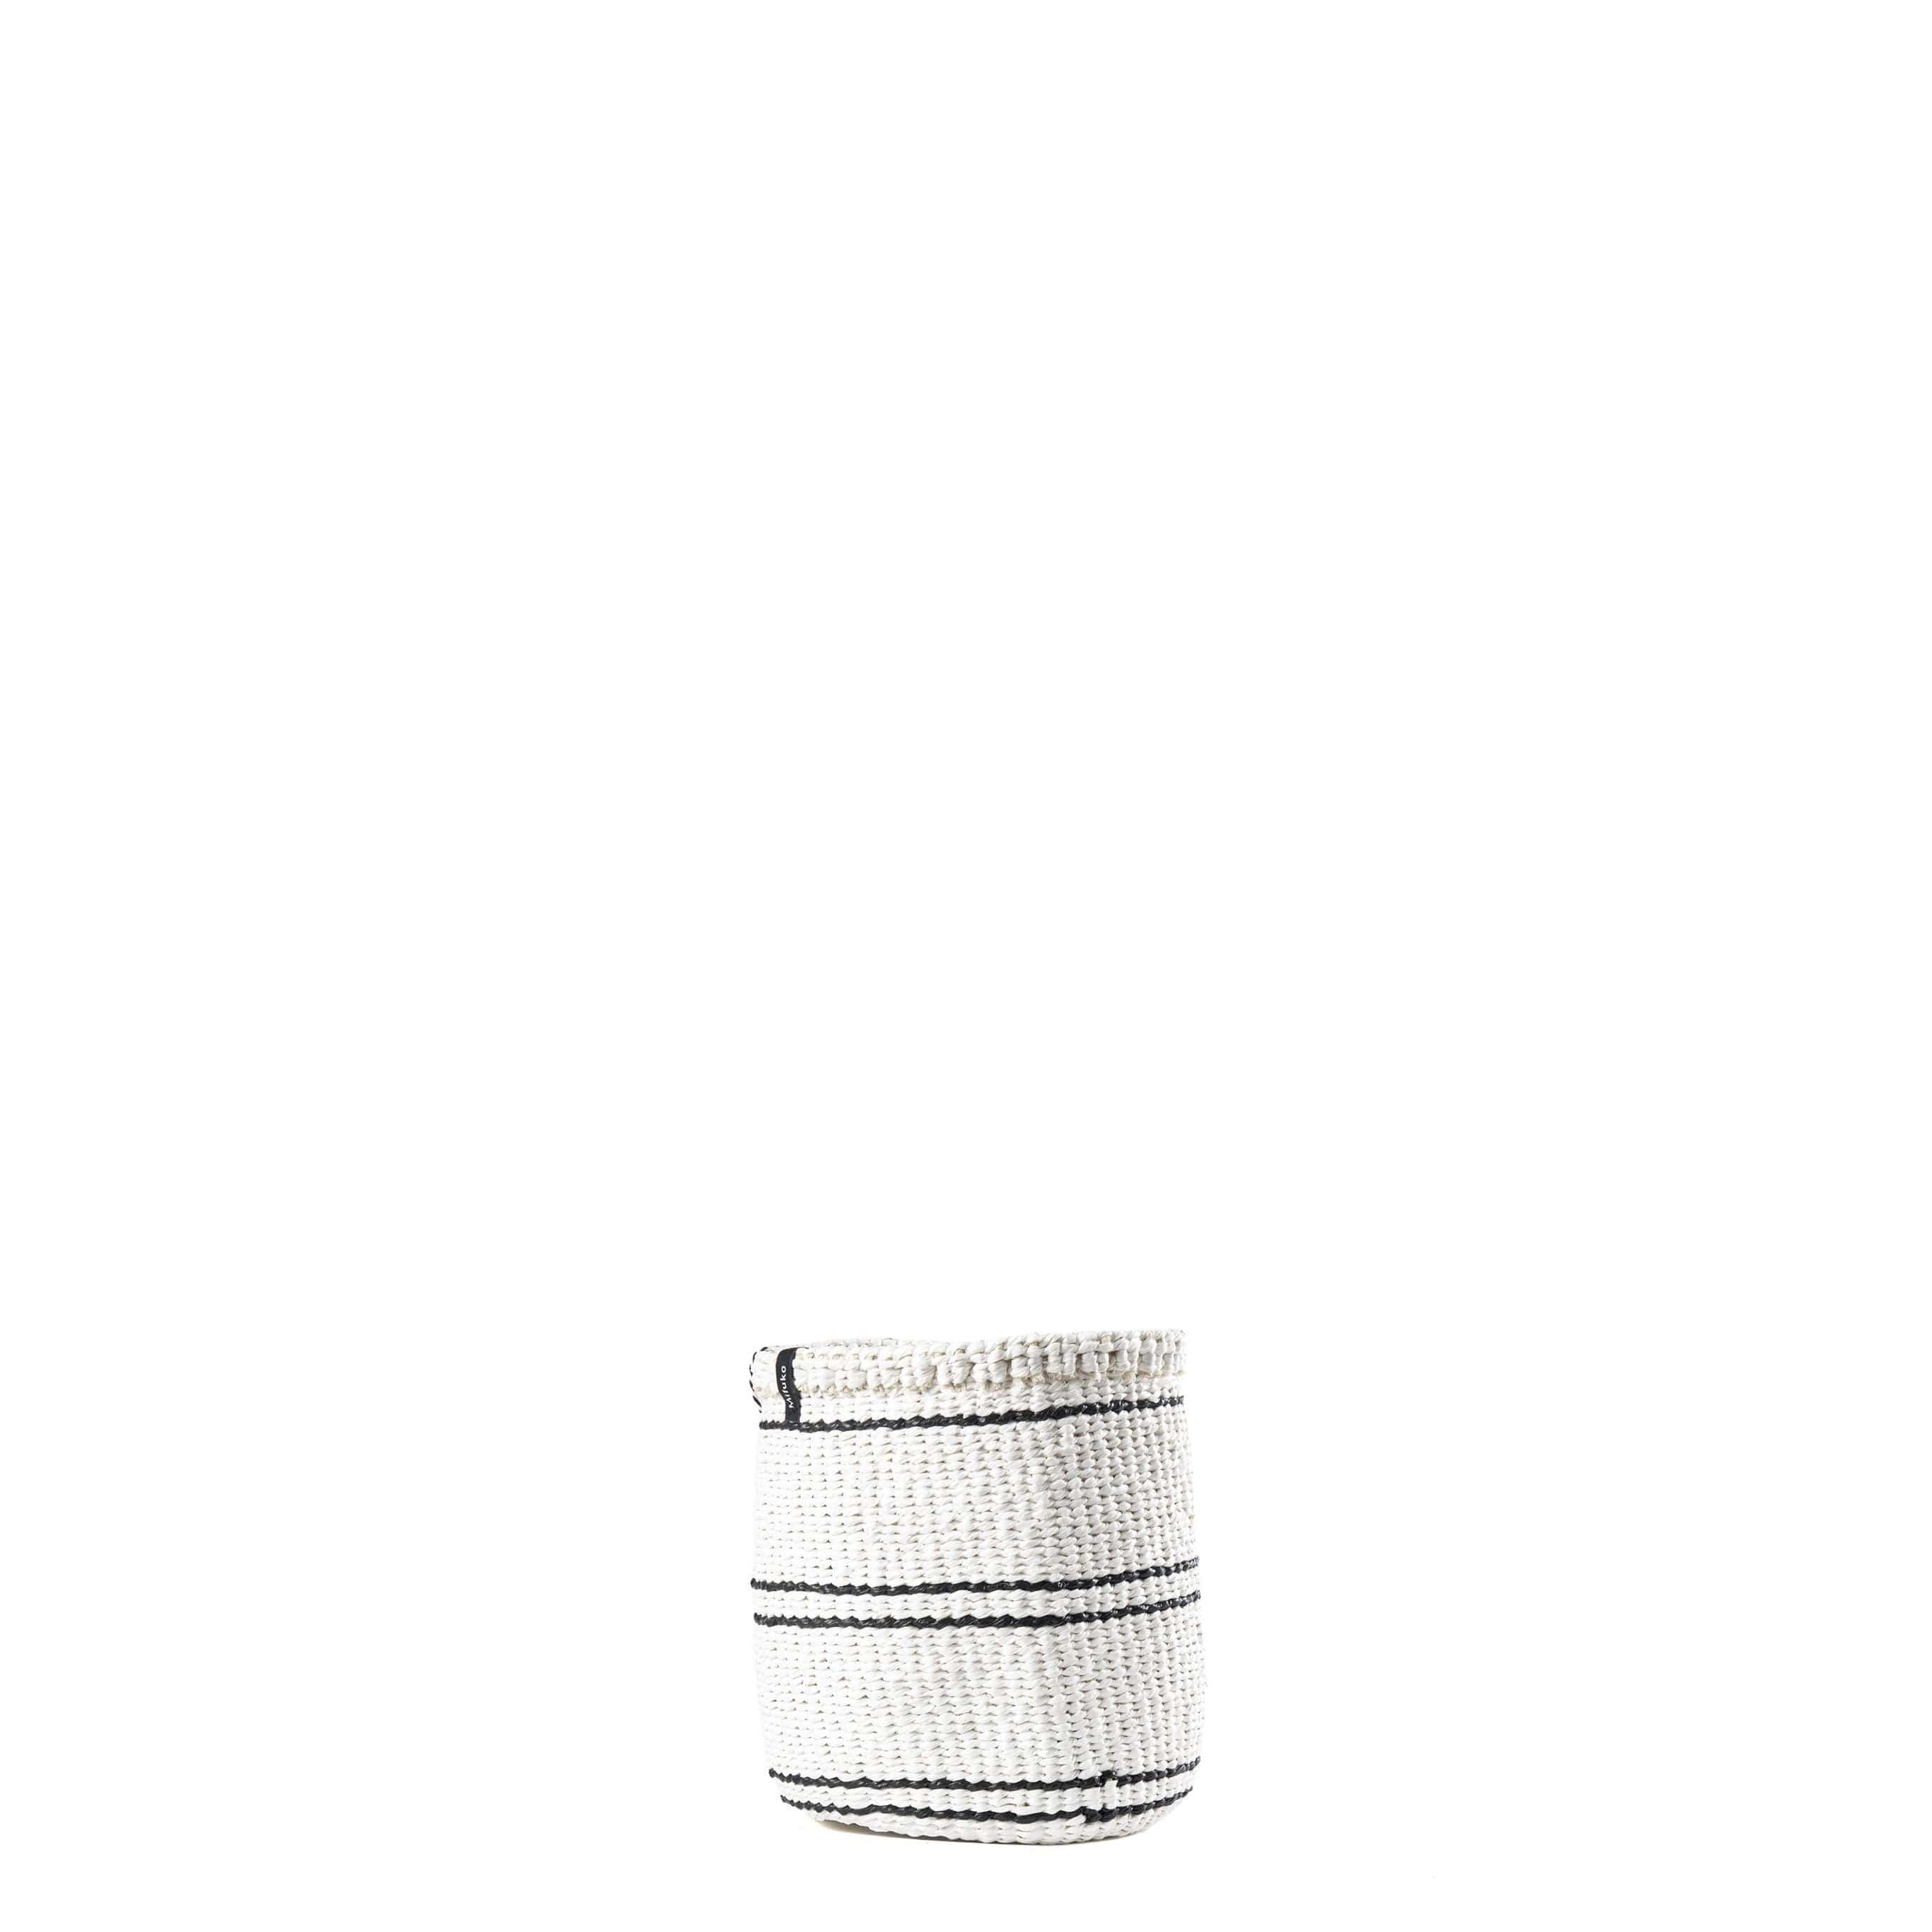 Mifuko Partly recycled plastic and sisal Small basket XS Kiondo basket | 5 black stripes XS